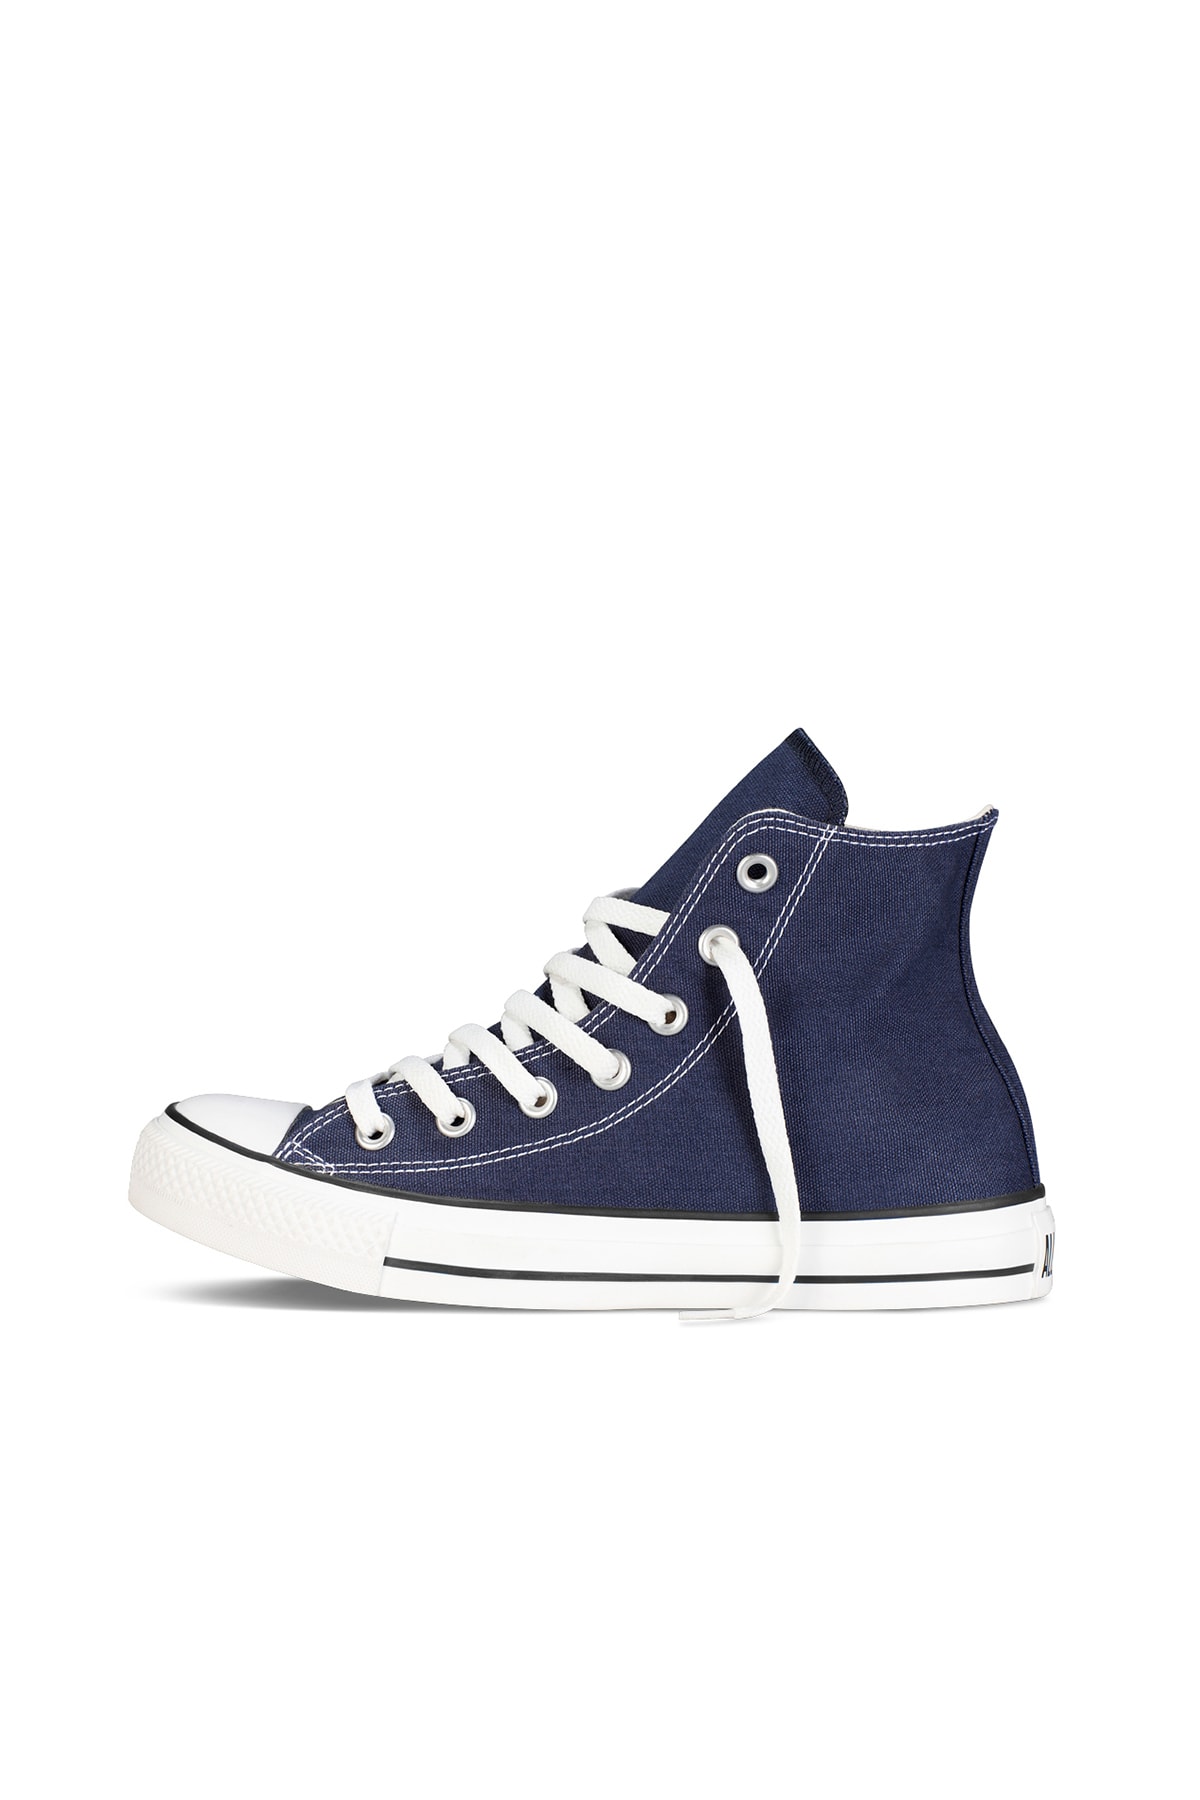 converse All Star Lacivert Unisex Sneaker M9622c